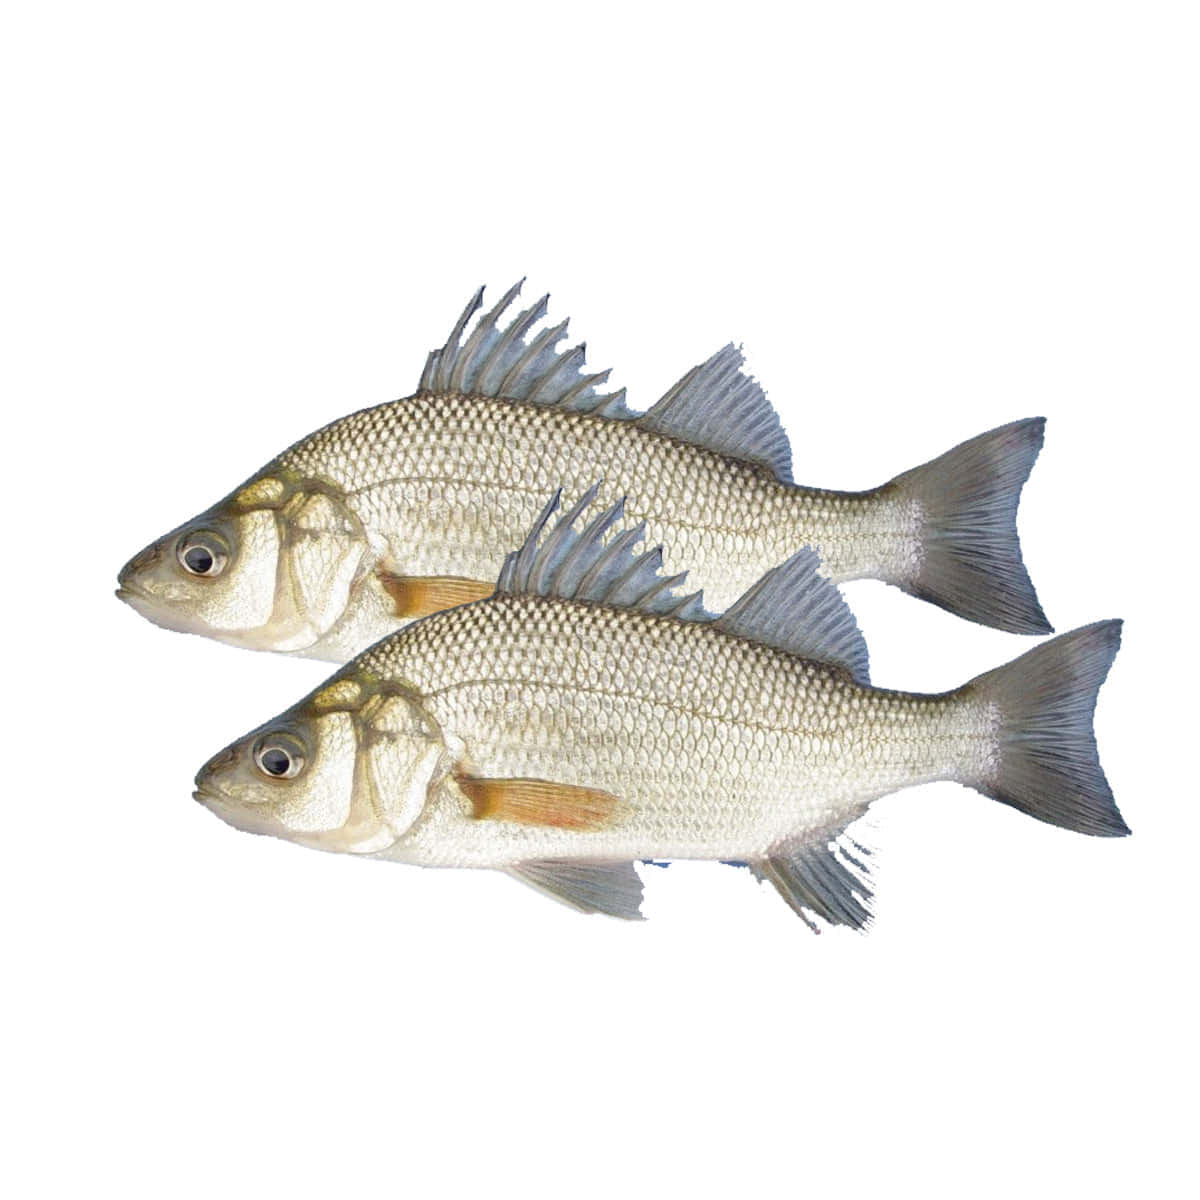 Two Freshwater Perch Fish Wallpaper